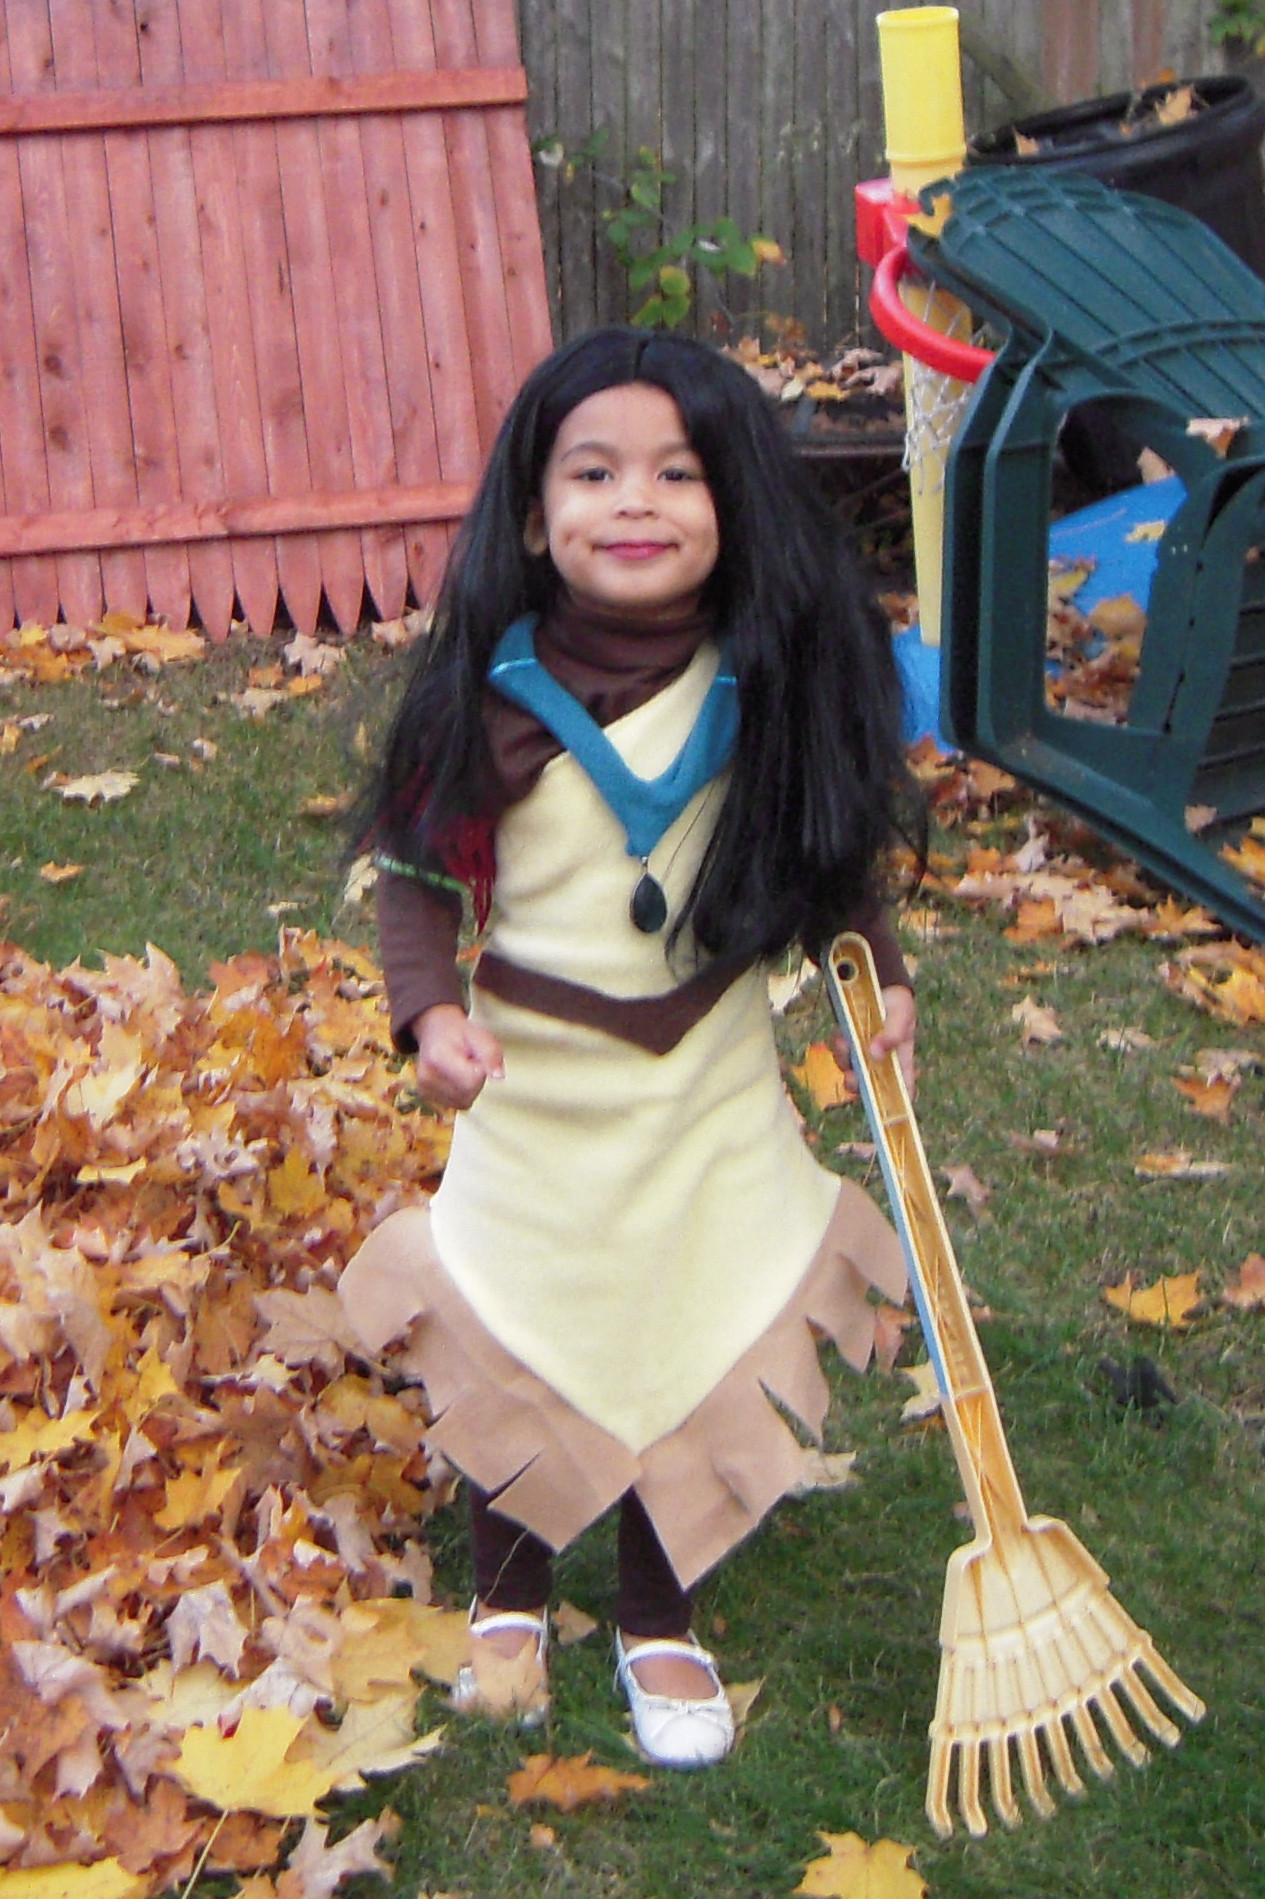 Best ideas about DIY Pocahontas Costume
. Save or Pin DIY Pocahontas Costume Now.